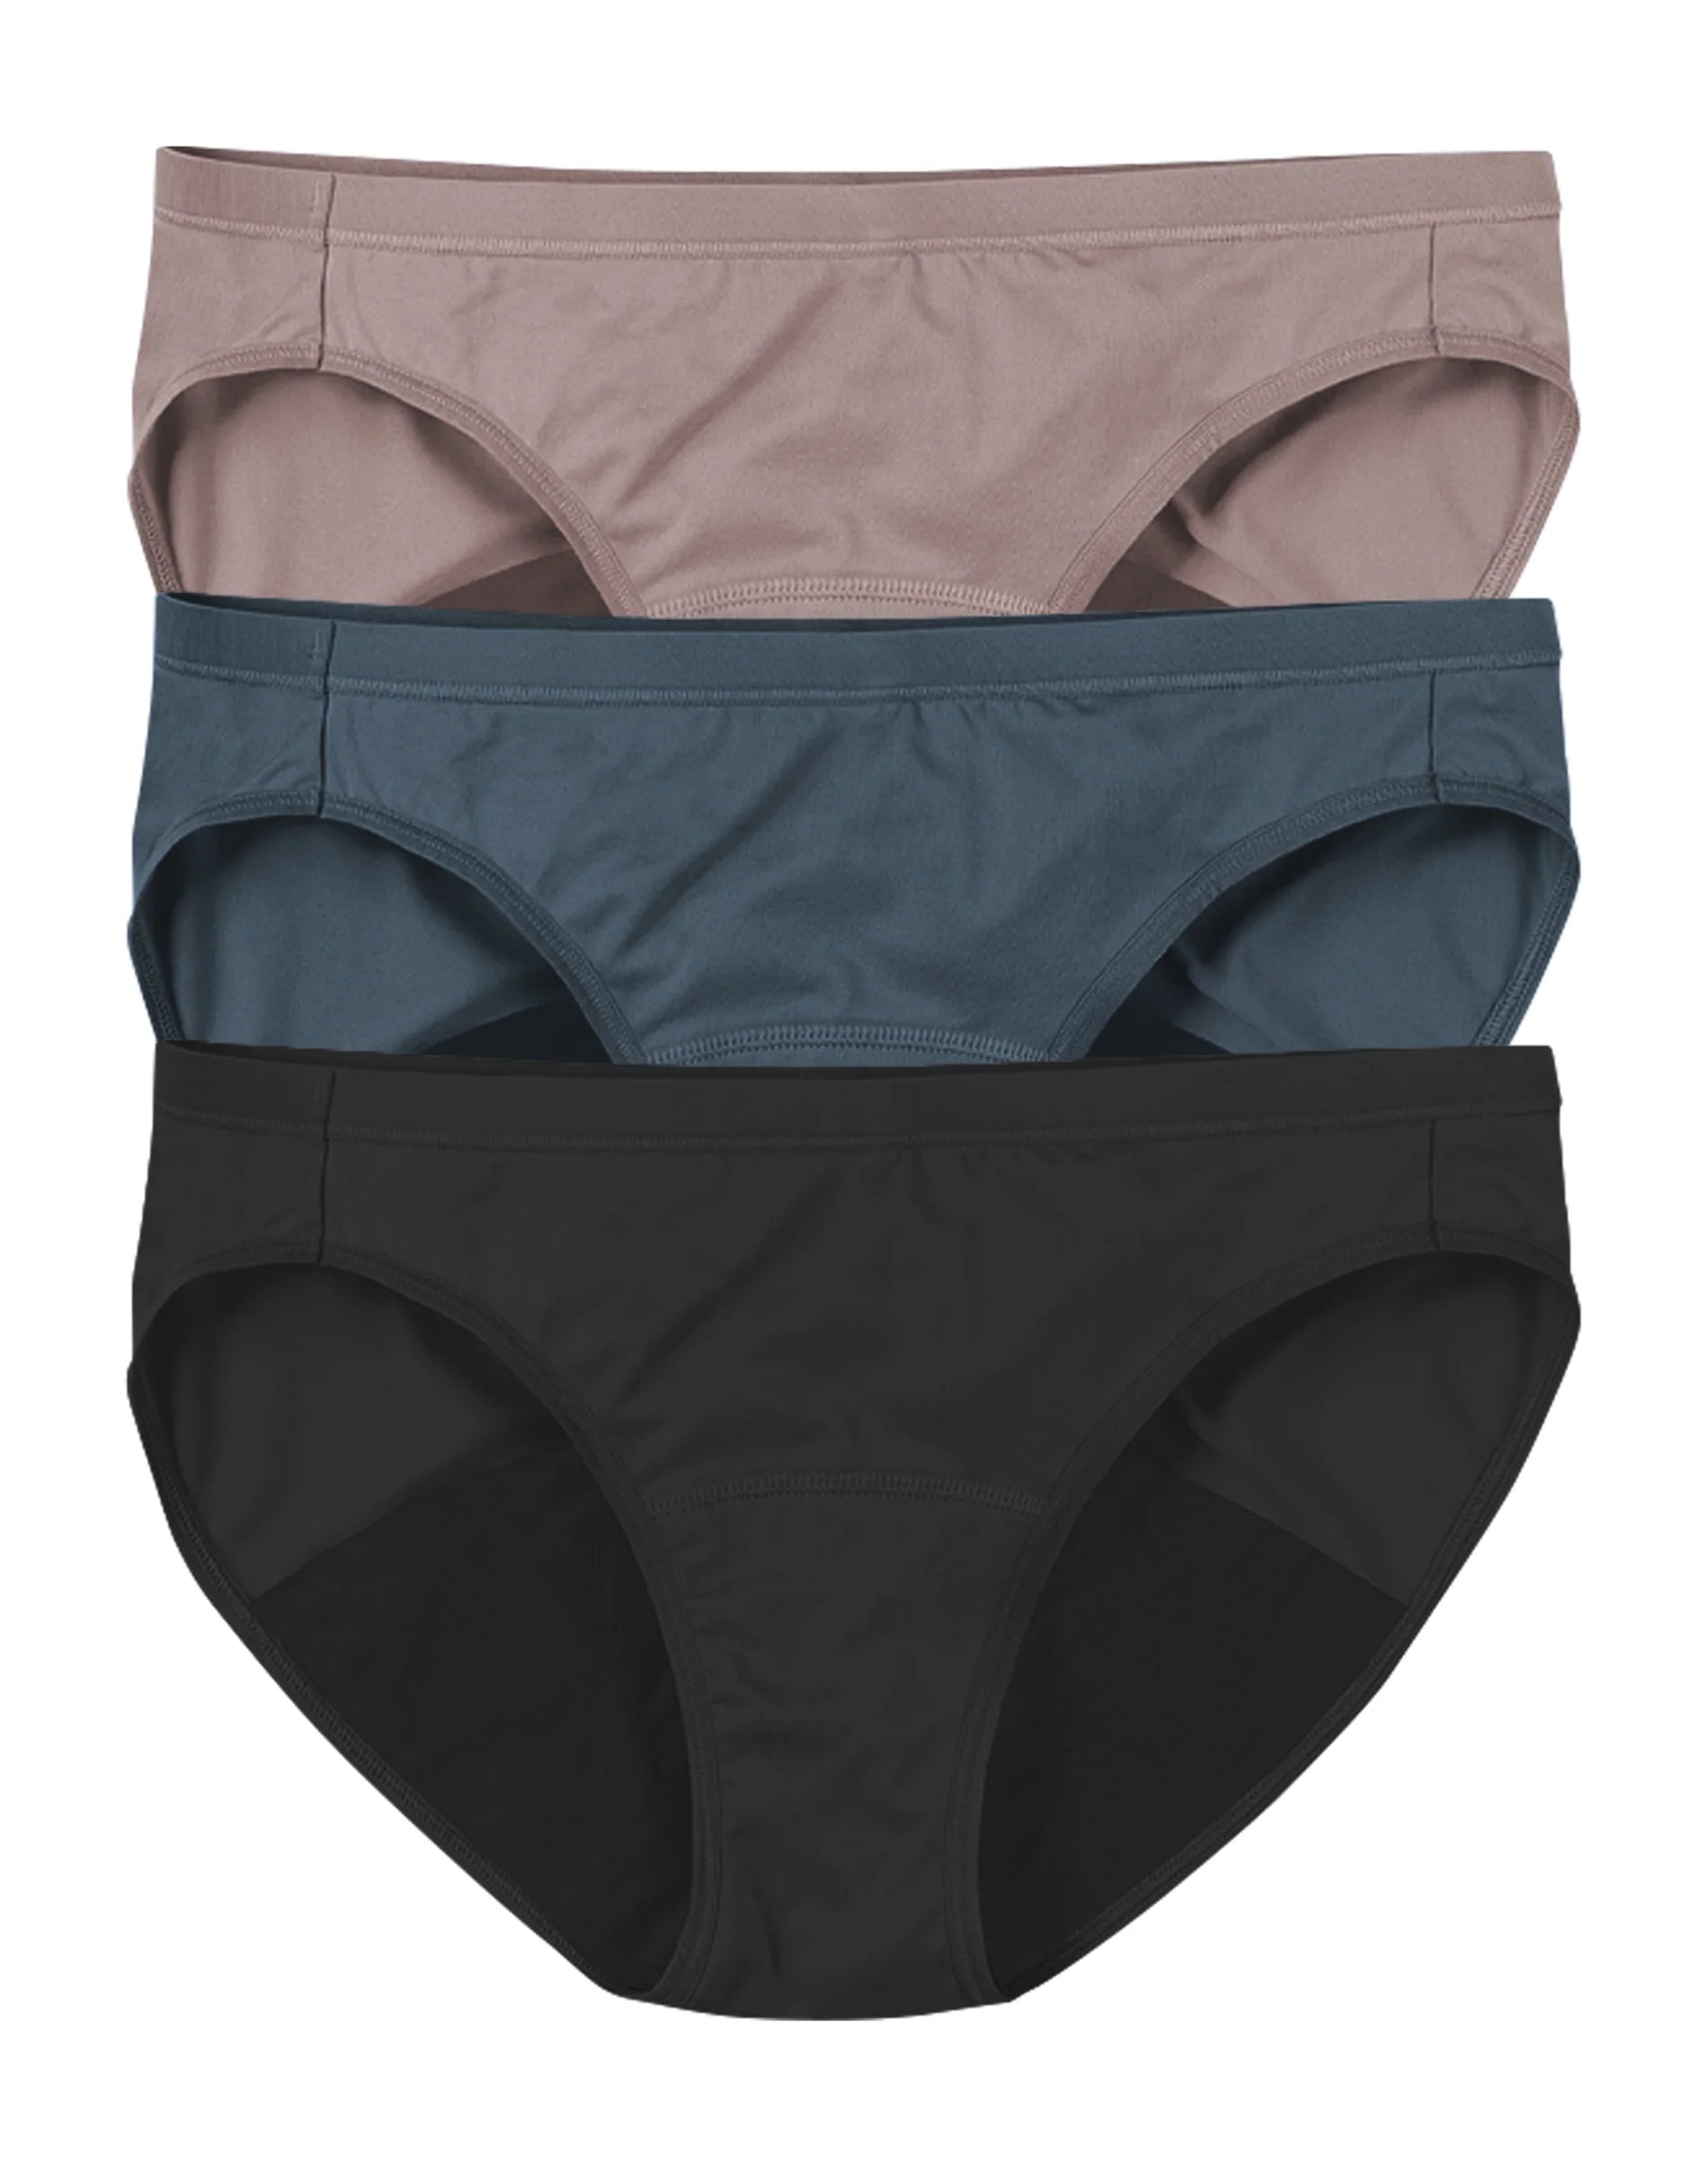 LL42AS - Hanes Women's Fresh & Dry Light Period Underwear Bikini 3-Pack